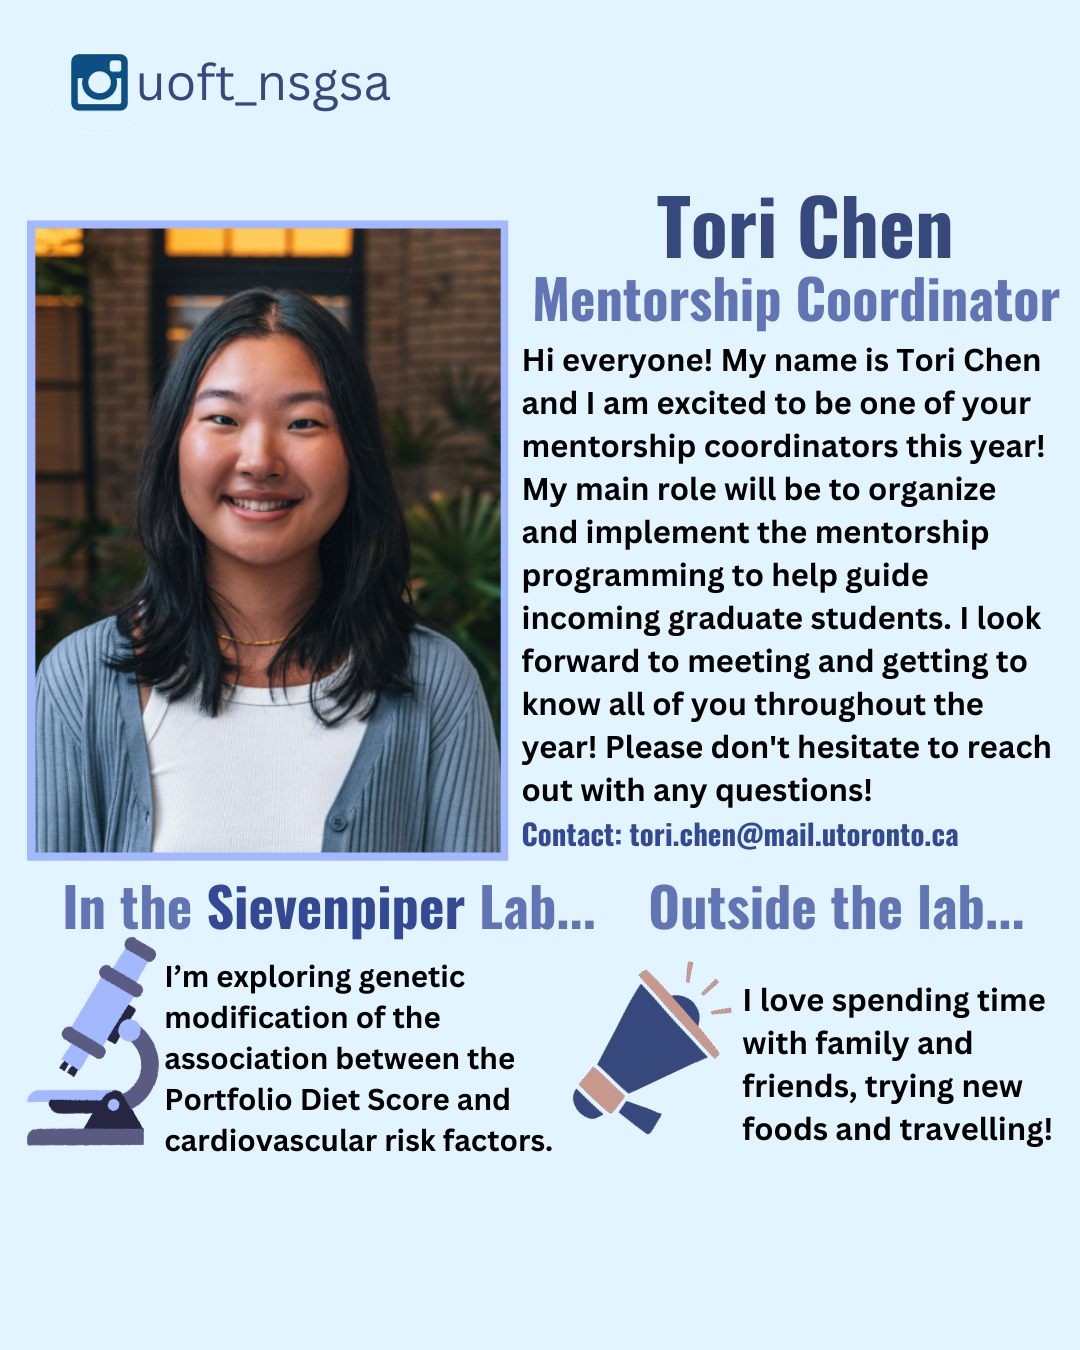 Tori Chen, Mentorship Coordinator